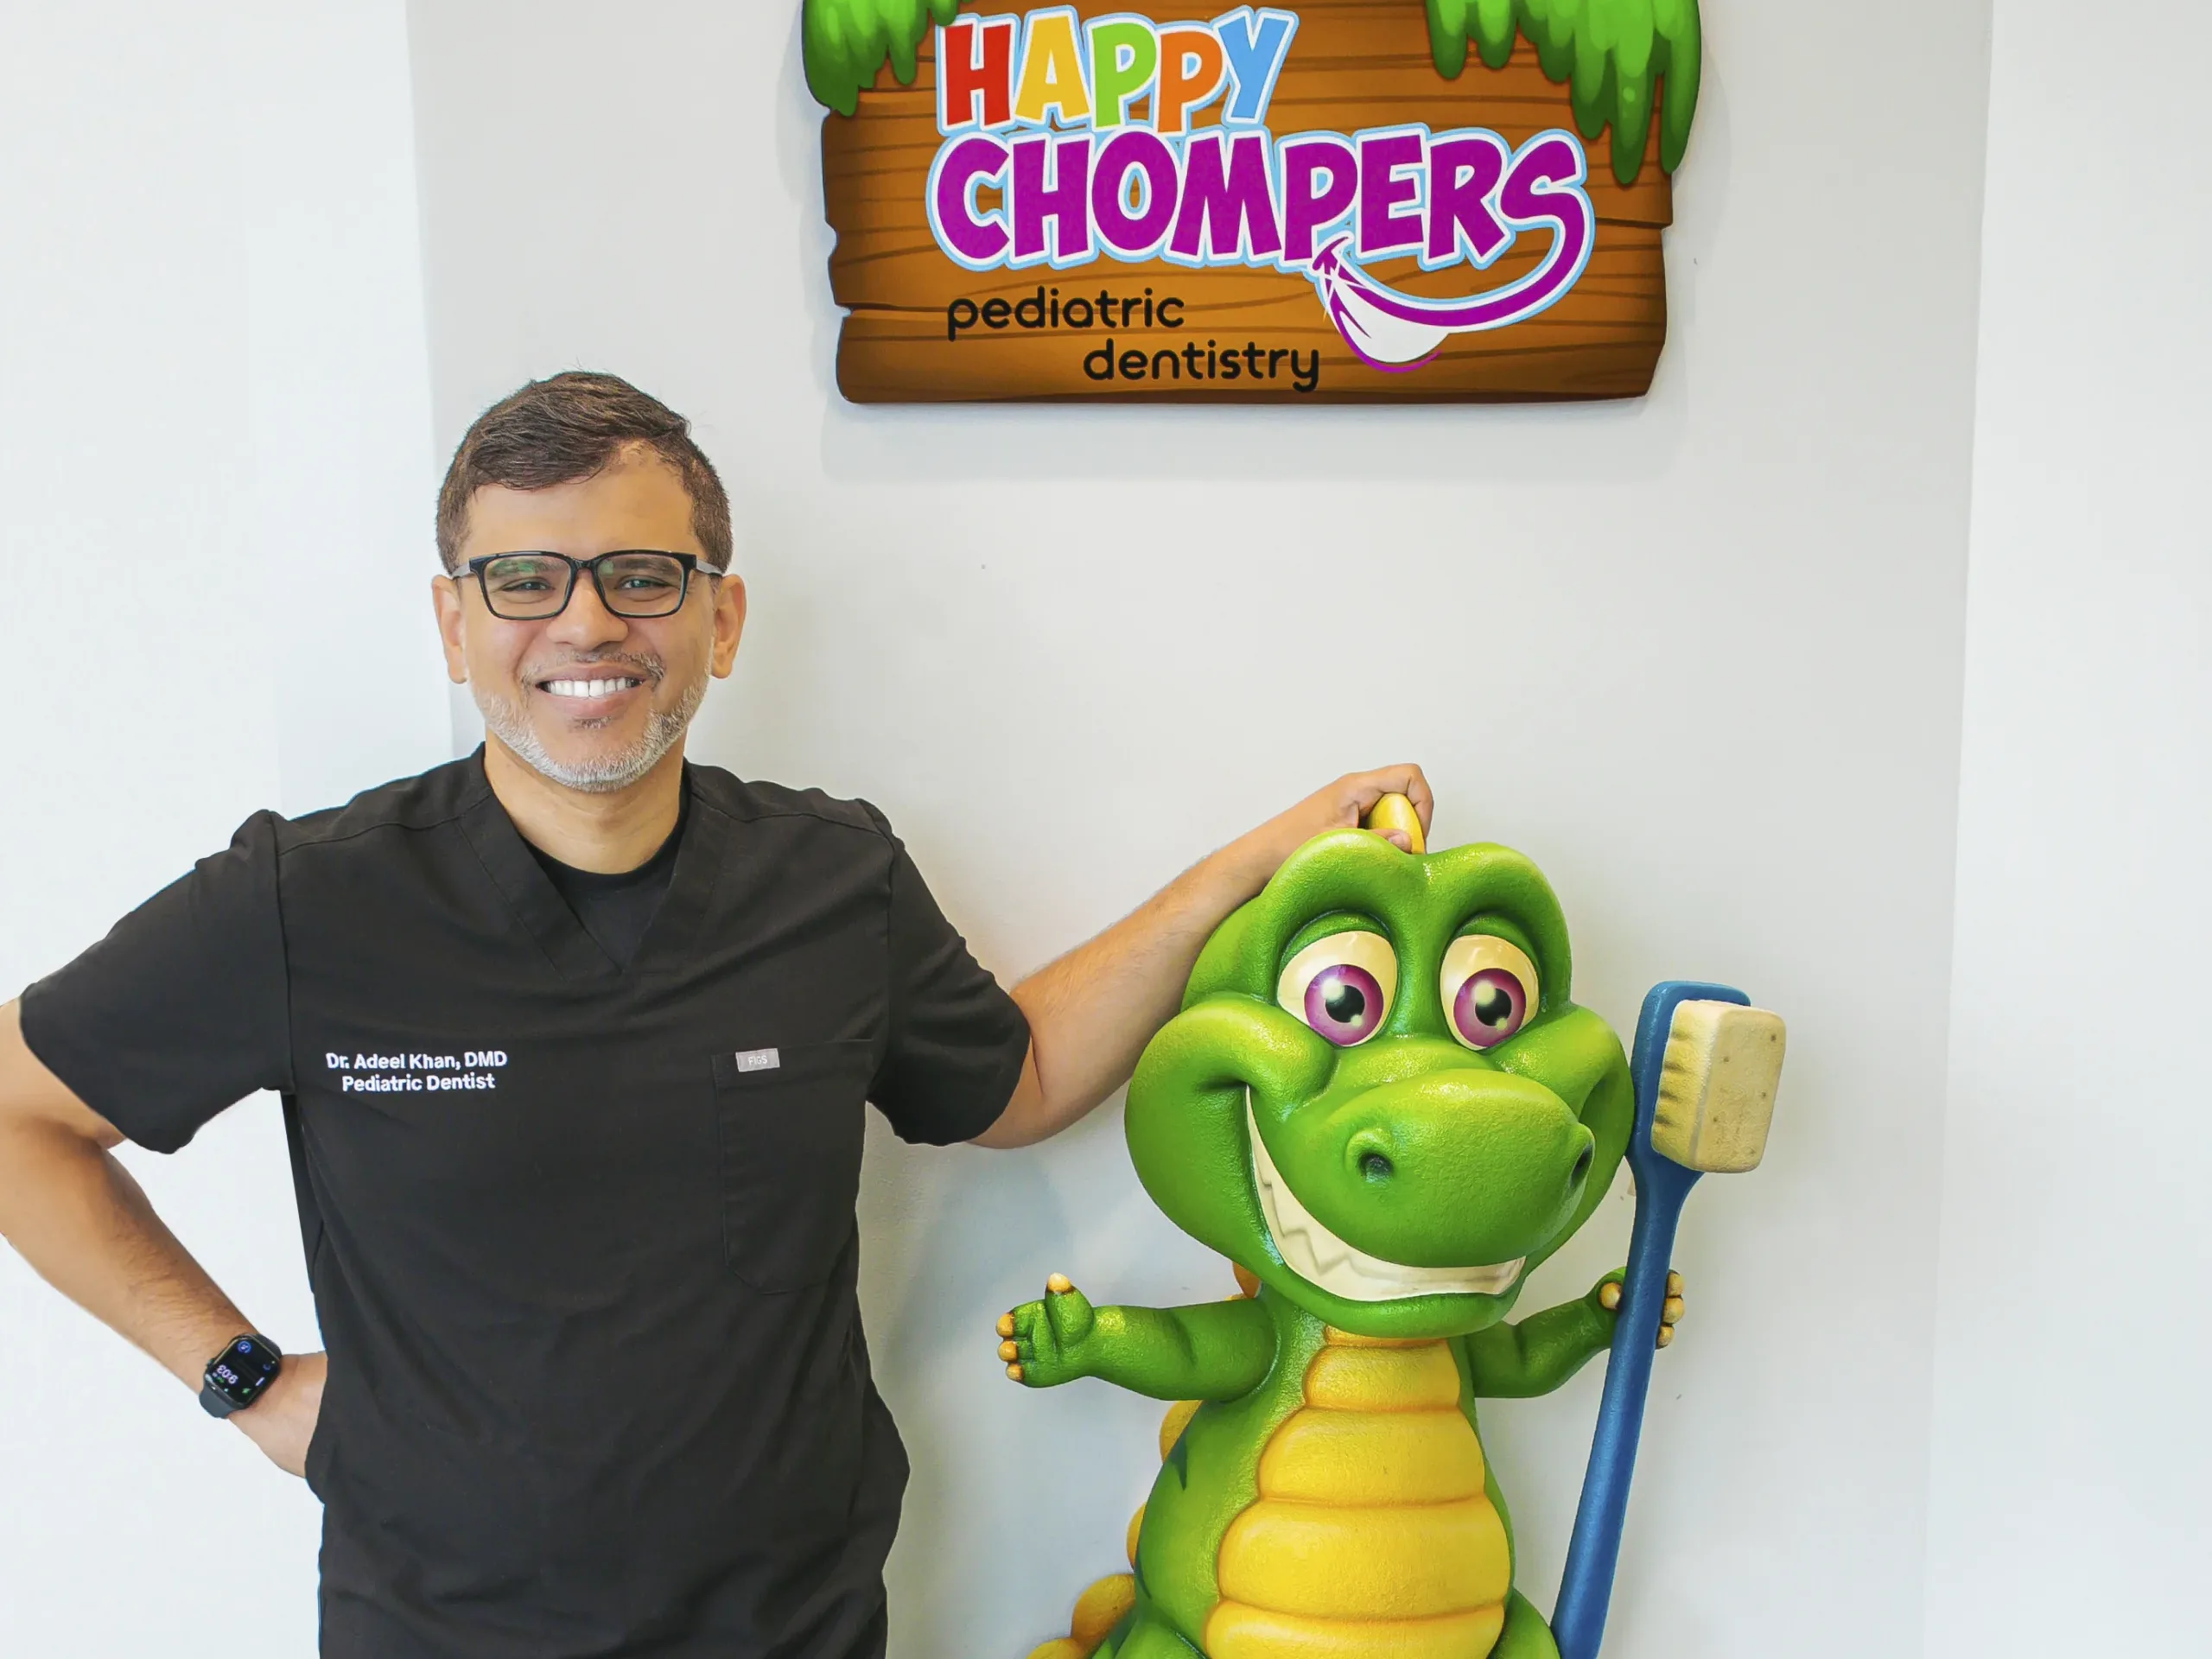 Happy Chompers Pediatric Dentistry Adeel Khan, DMD